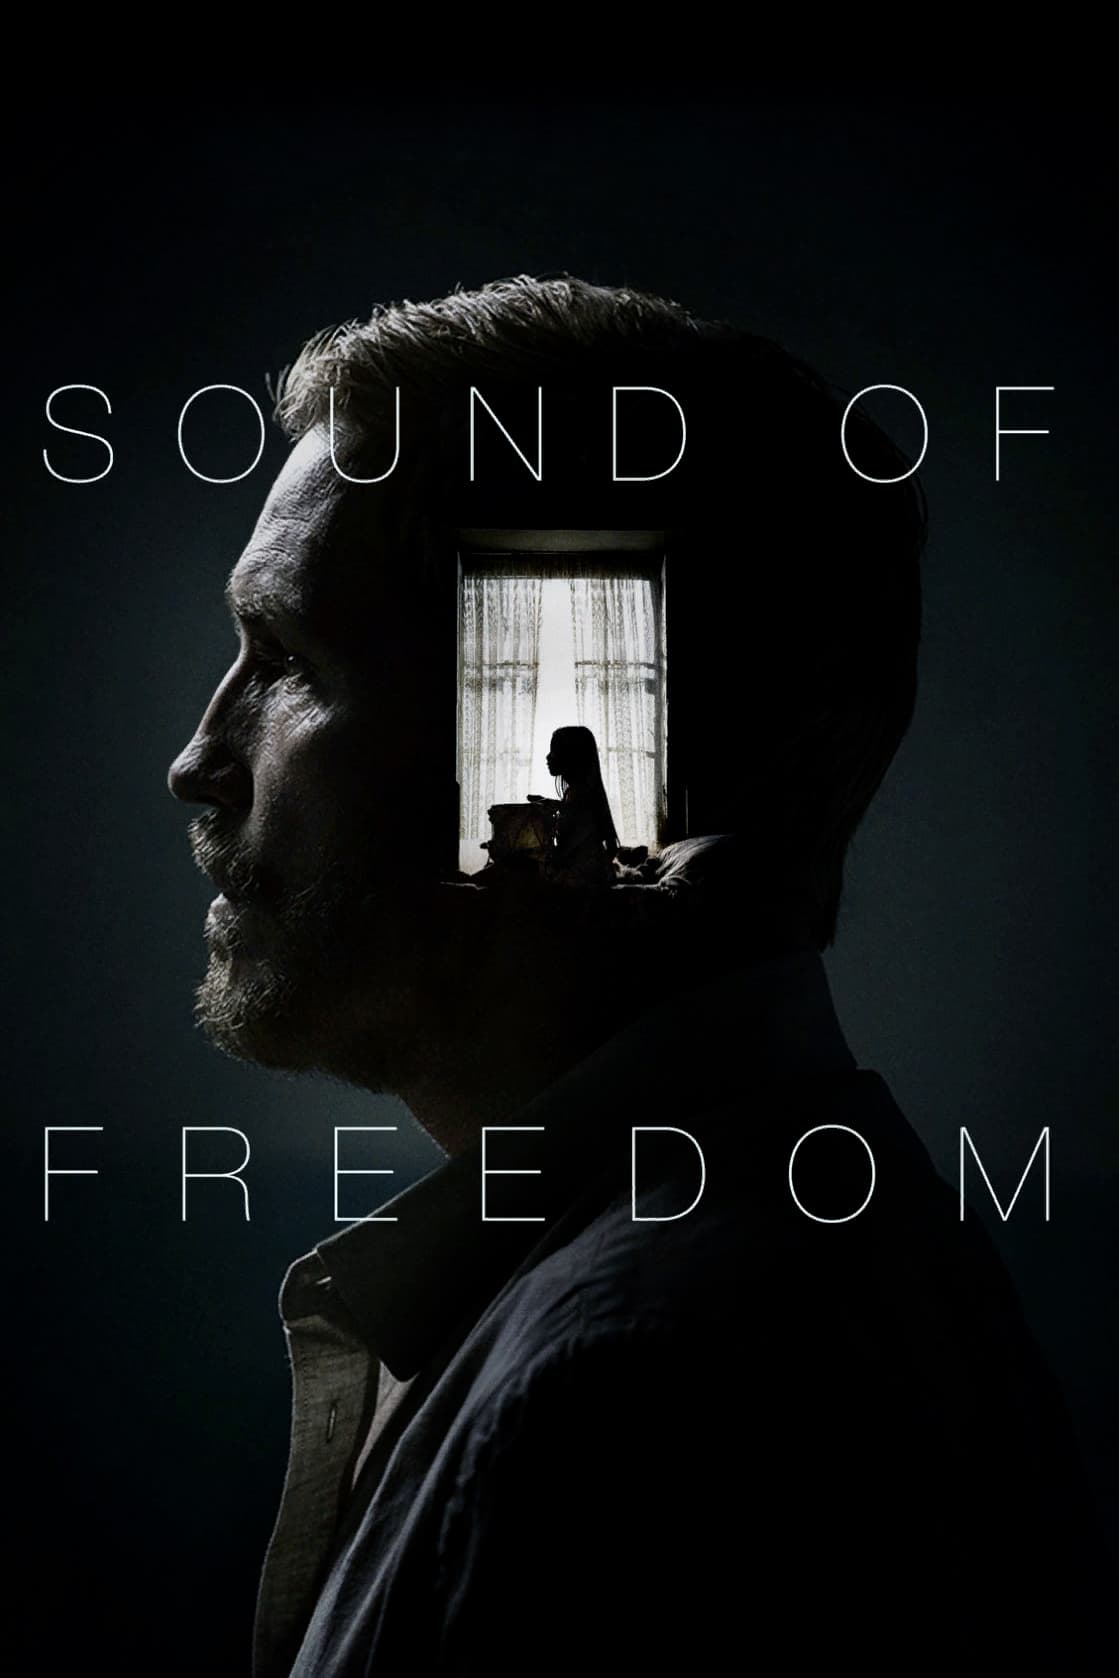 Sound of Freedom - Movie to watch